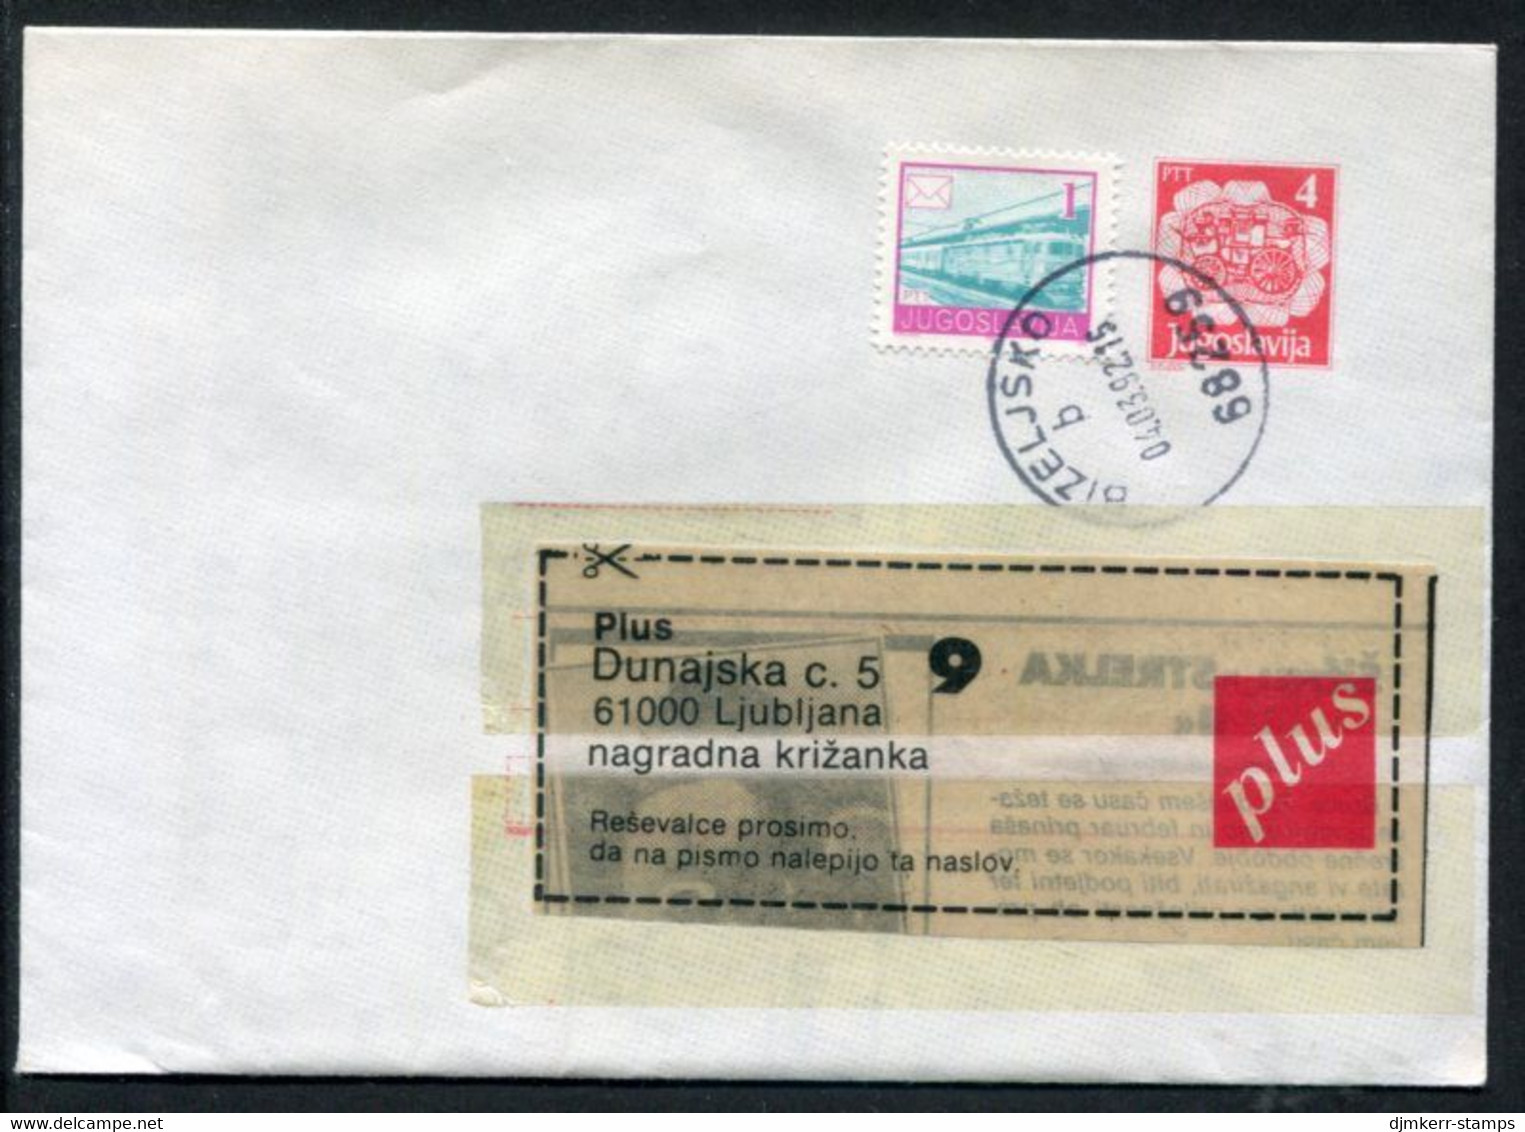 YUGOSLAVIA 1991 Mailcoach 4 D. Stationery Envelope Used With Additional Franking.  Michel U98 - Ganzsachen